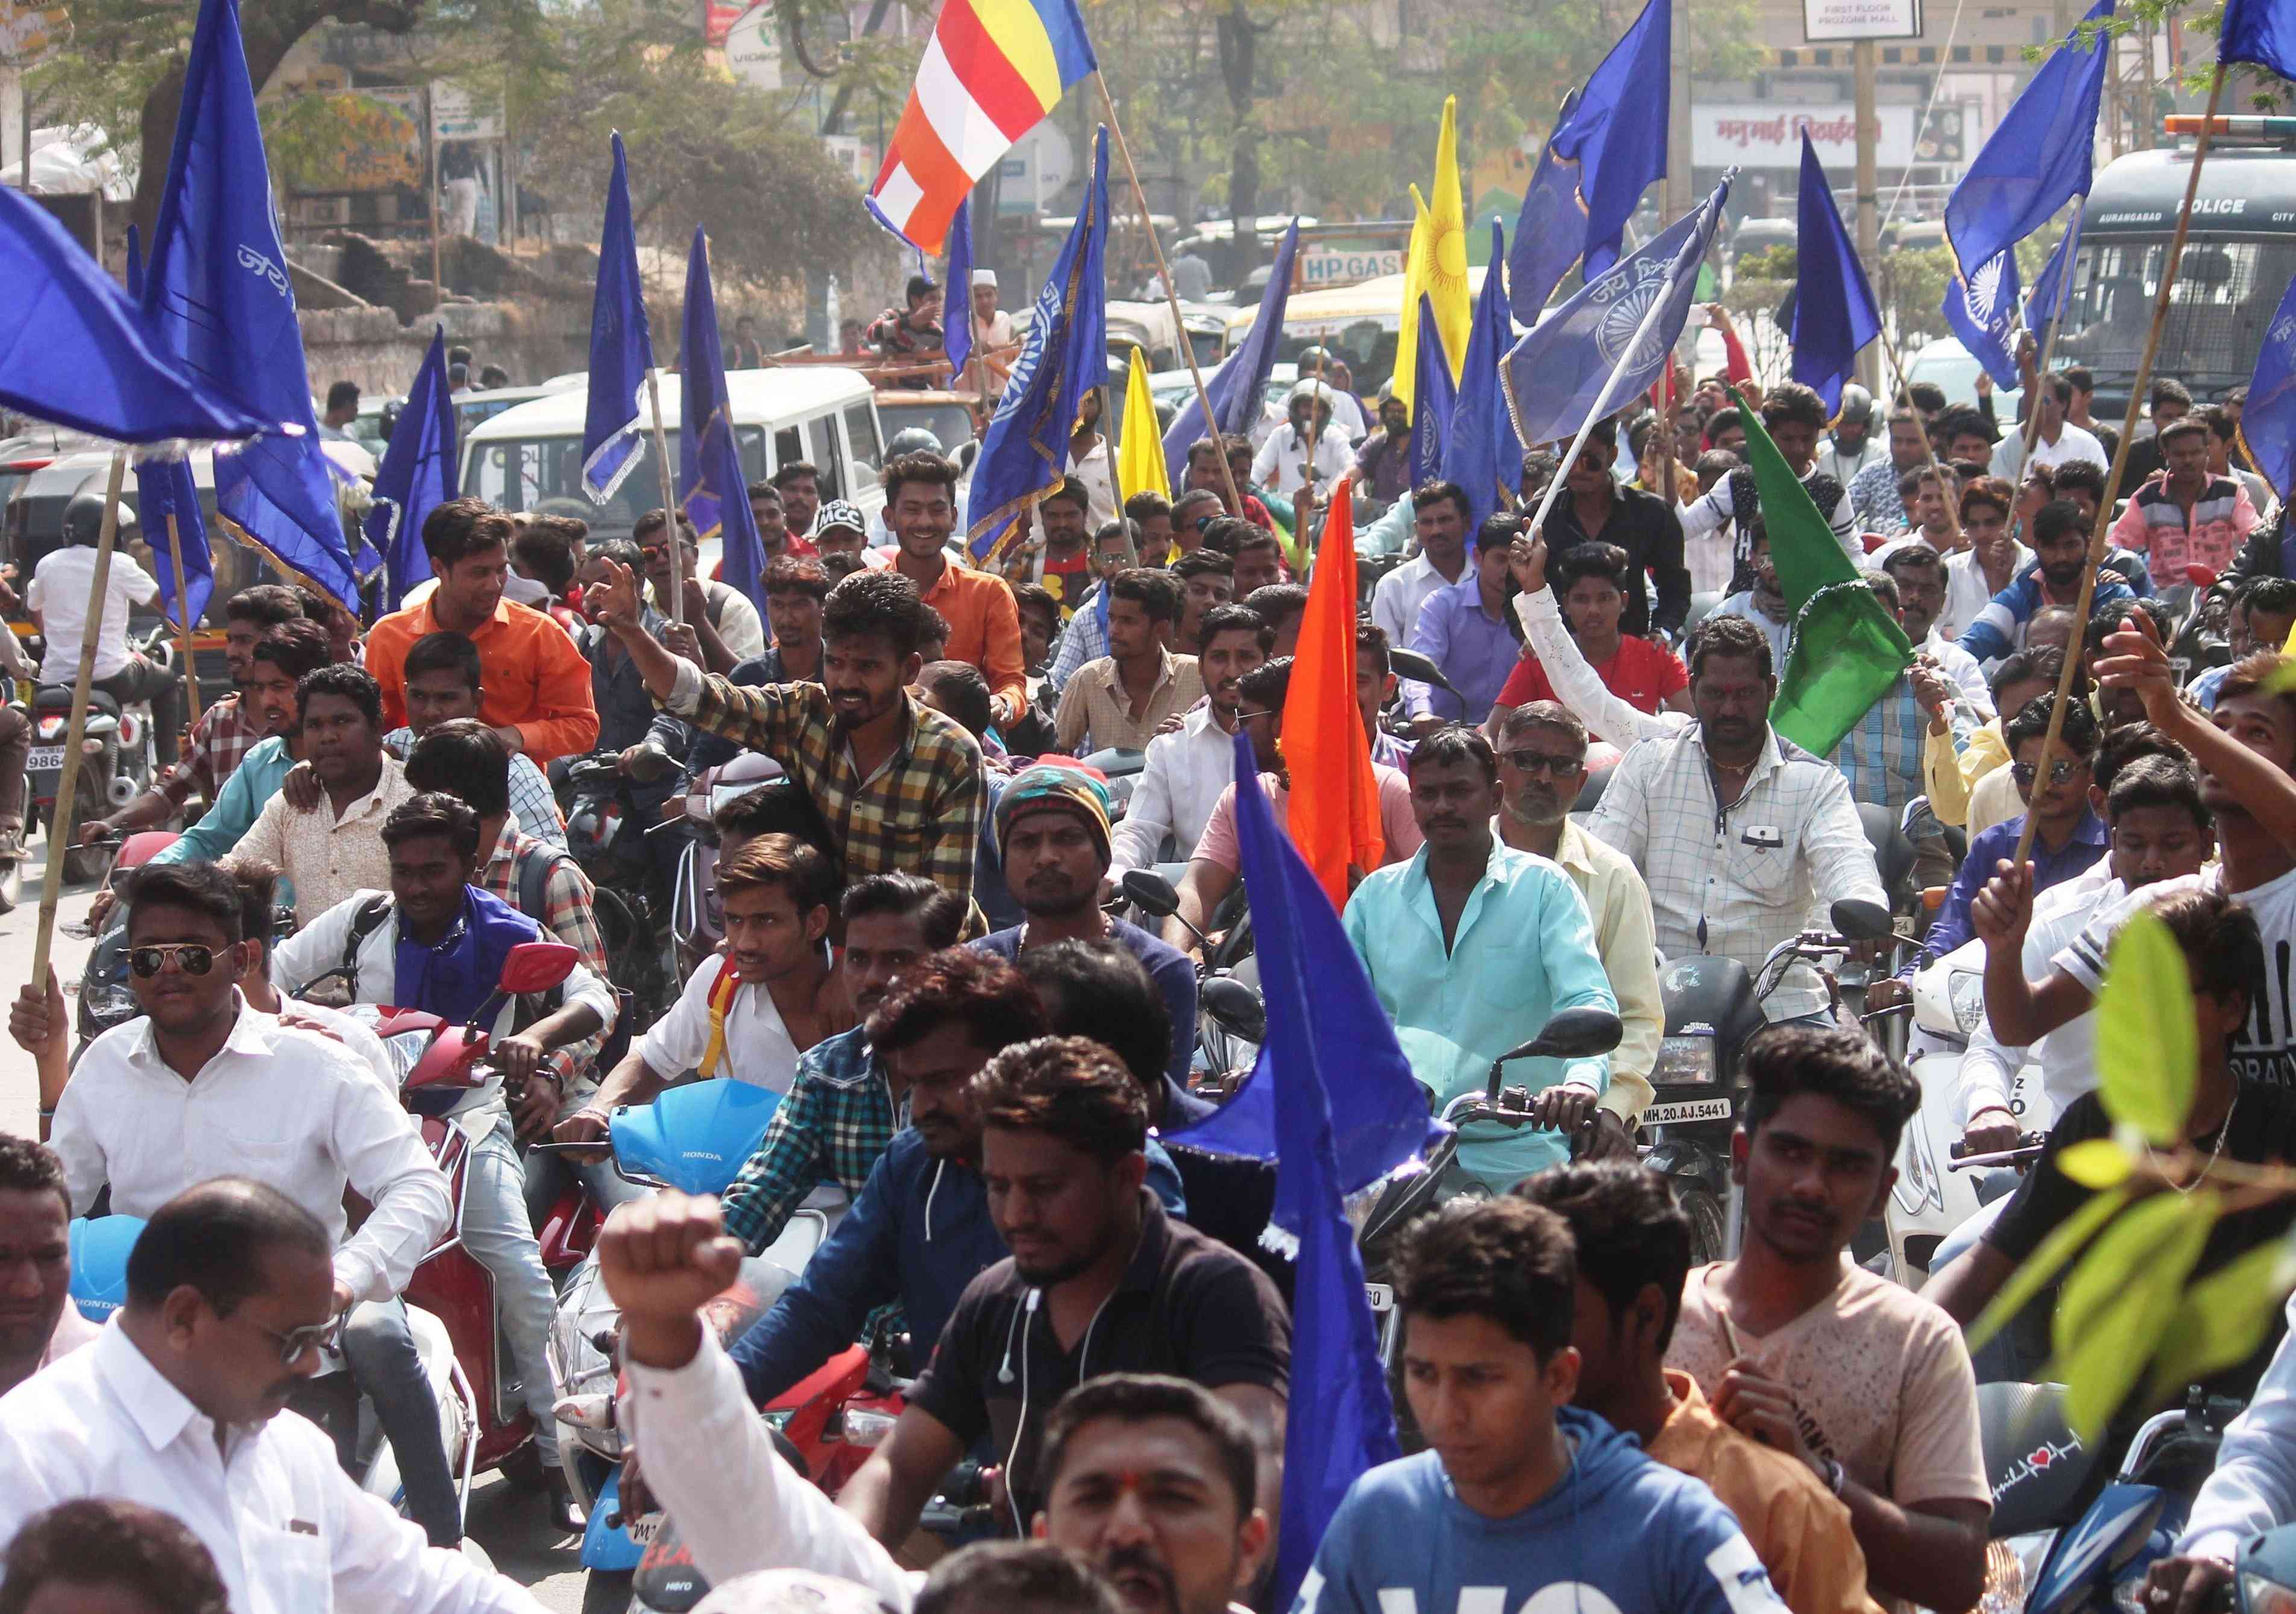 assembly elections near in madhya pradesh, more Challenges for shivraj singh chauhan - Satya Hindi